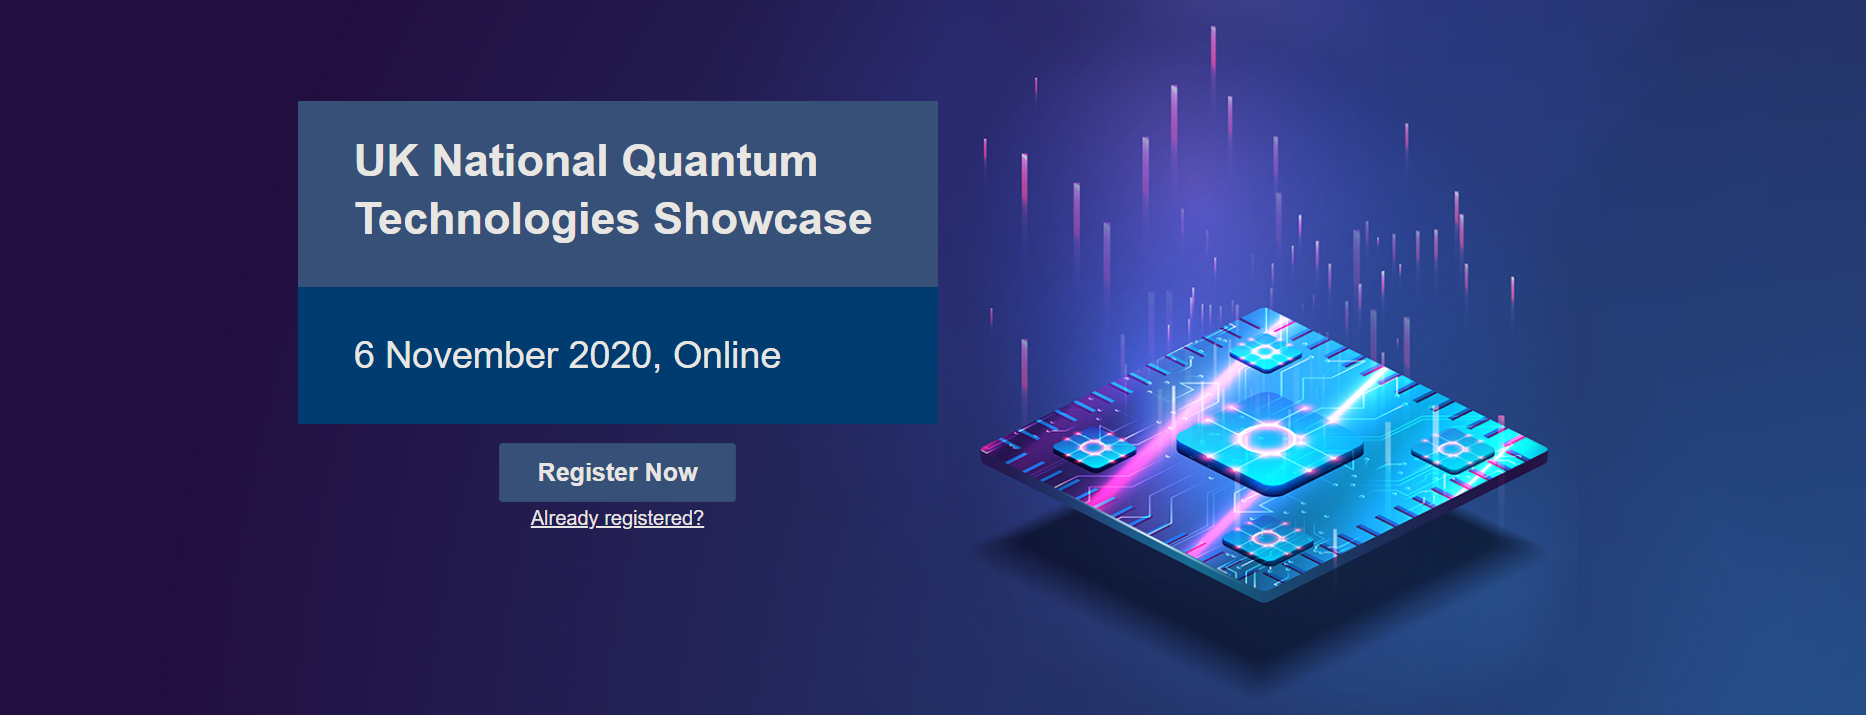 UK National Quantum Technologies Showcase